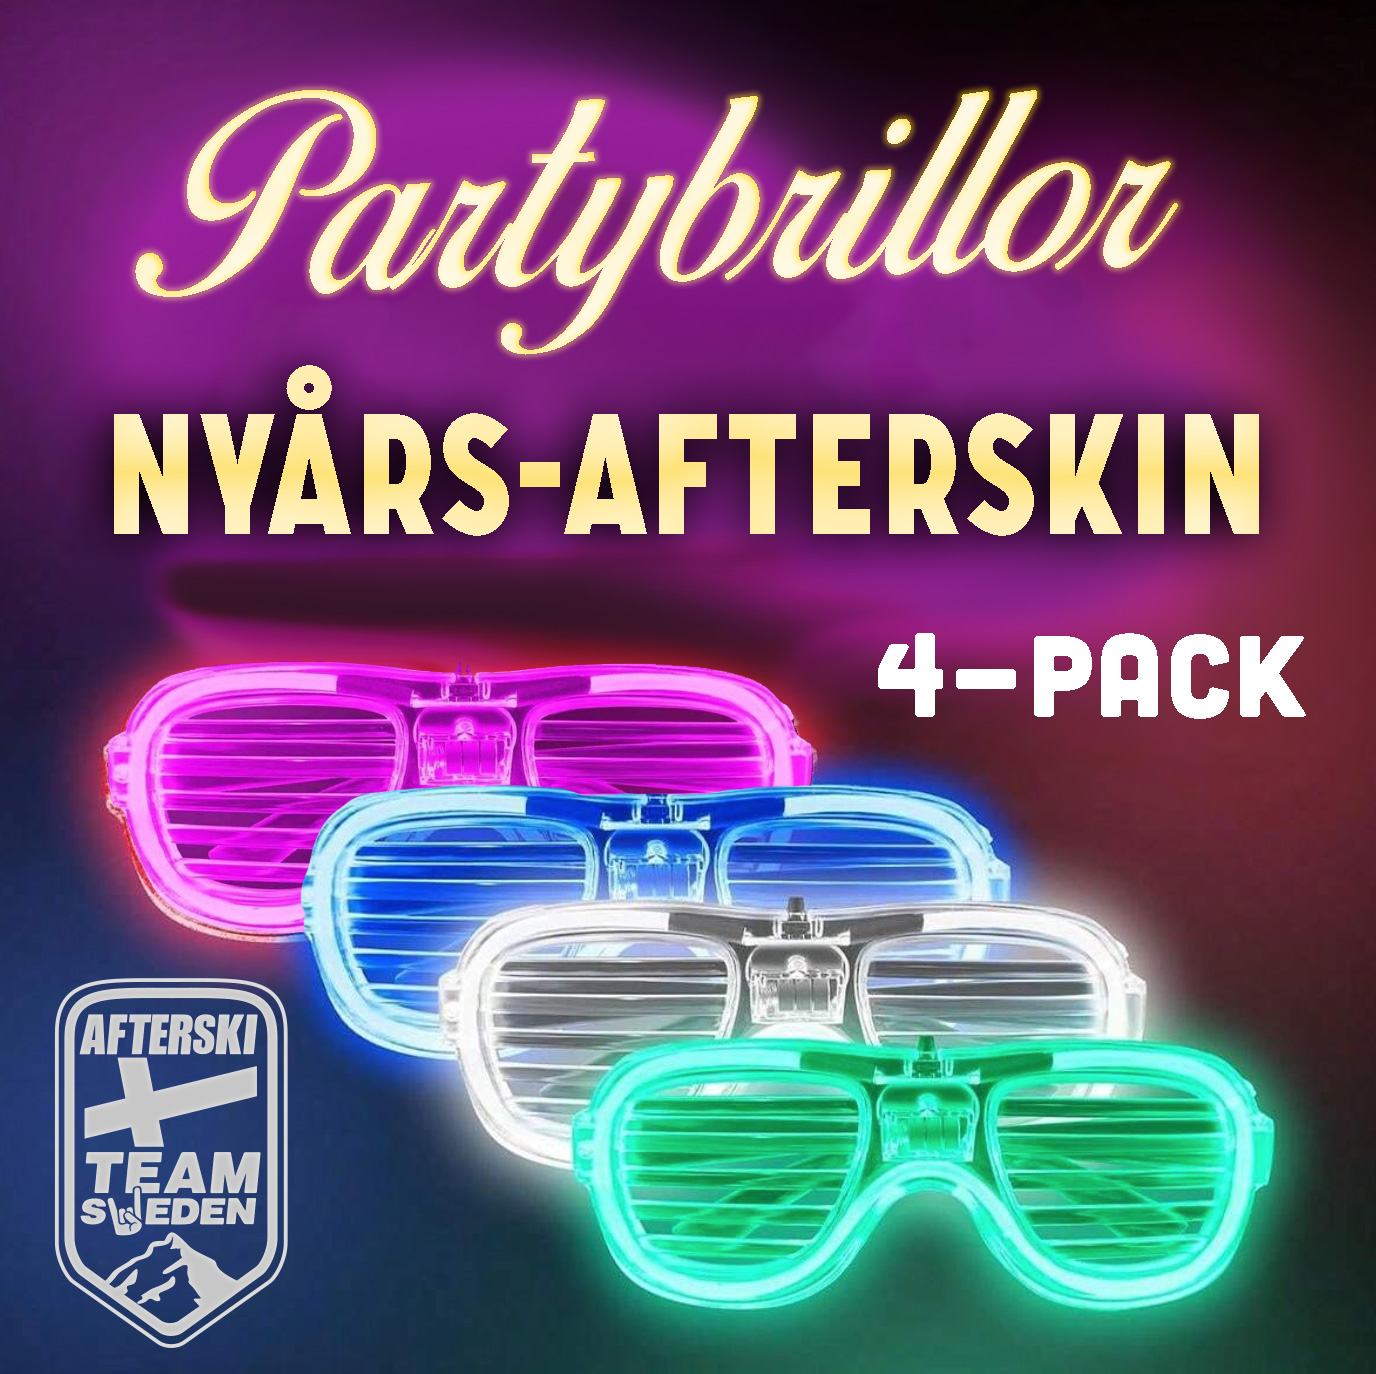 Partybrillor Lysdioder 4-pack